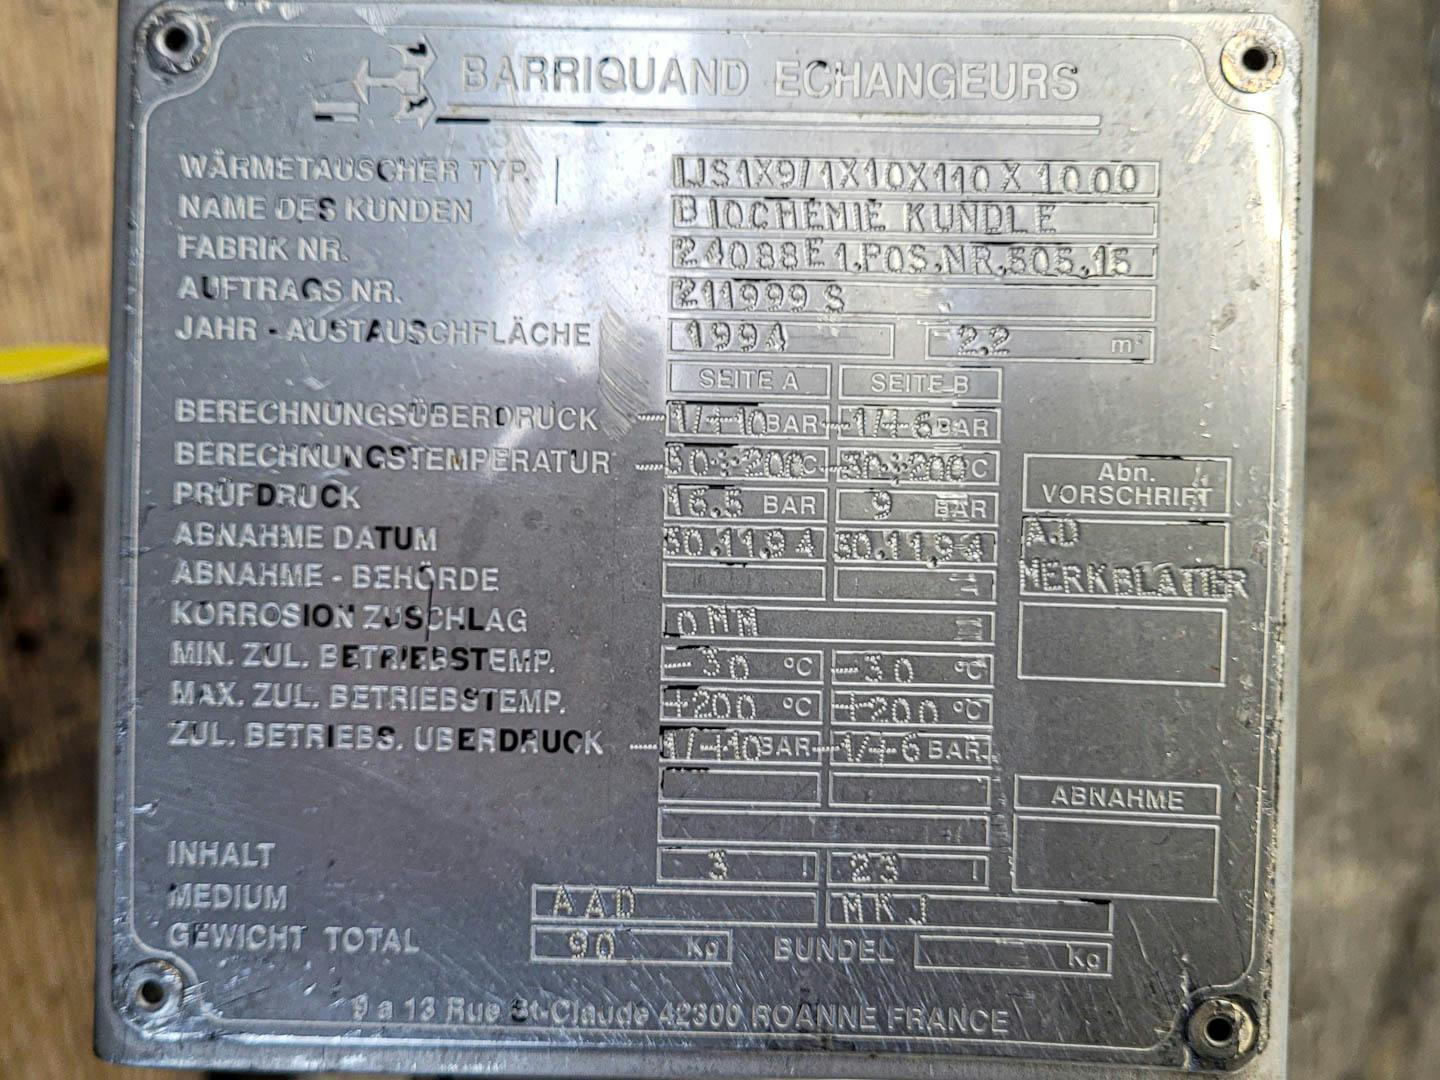 Barriquand Platular IJS 1x9/1x10x110x1000 2,2 m² - Plate heat exchanger - image 5